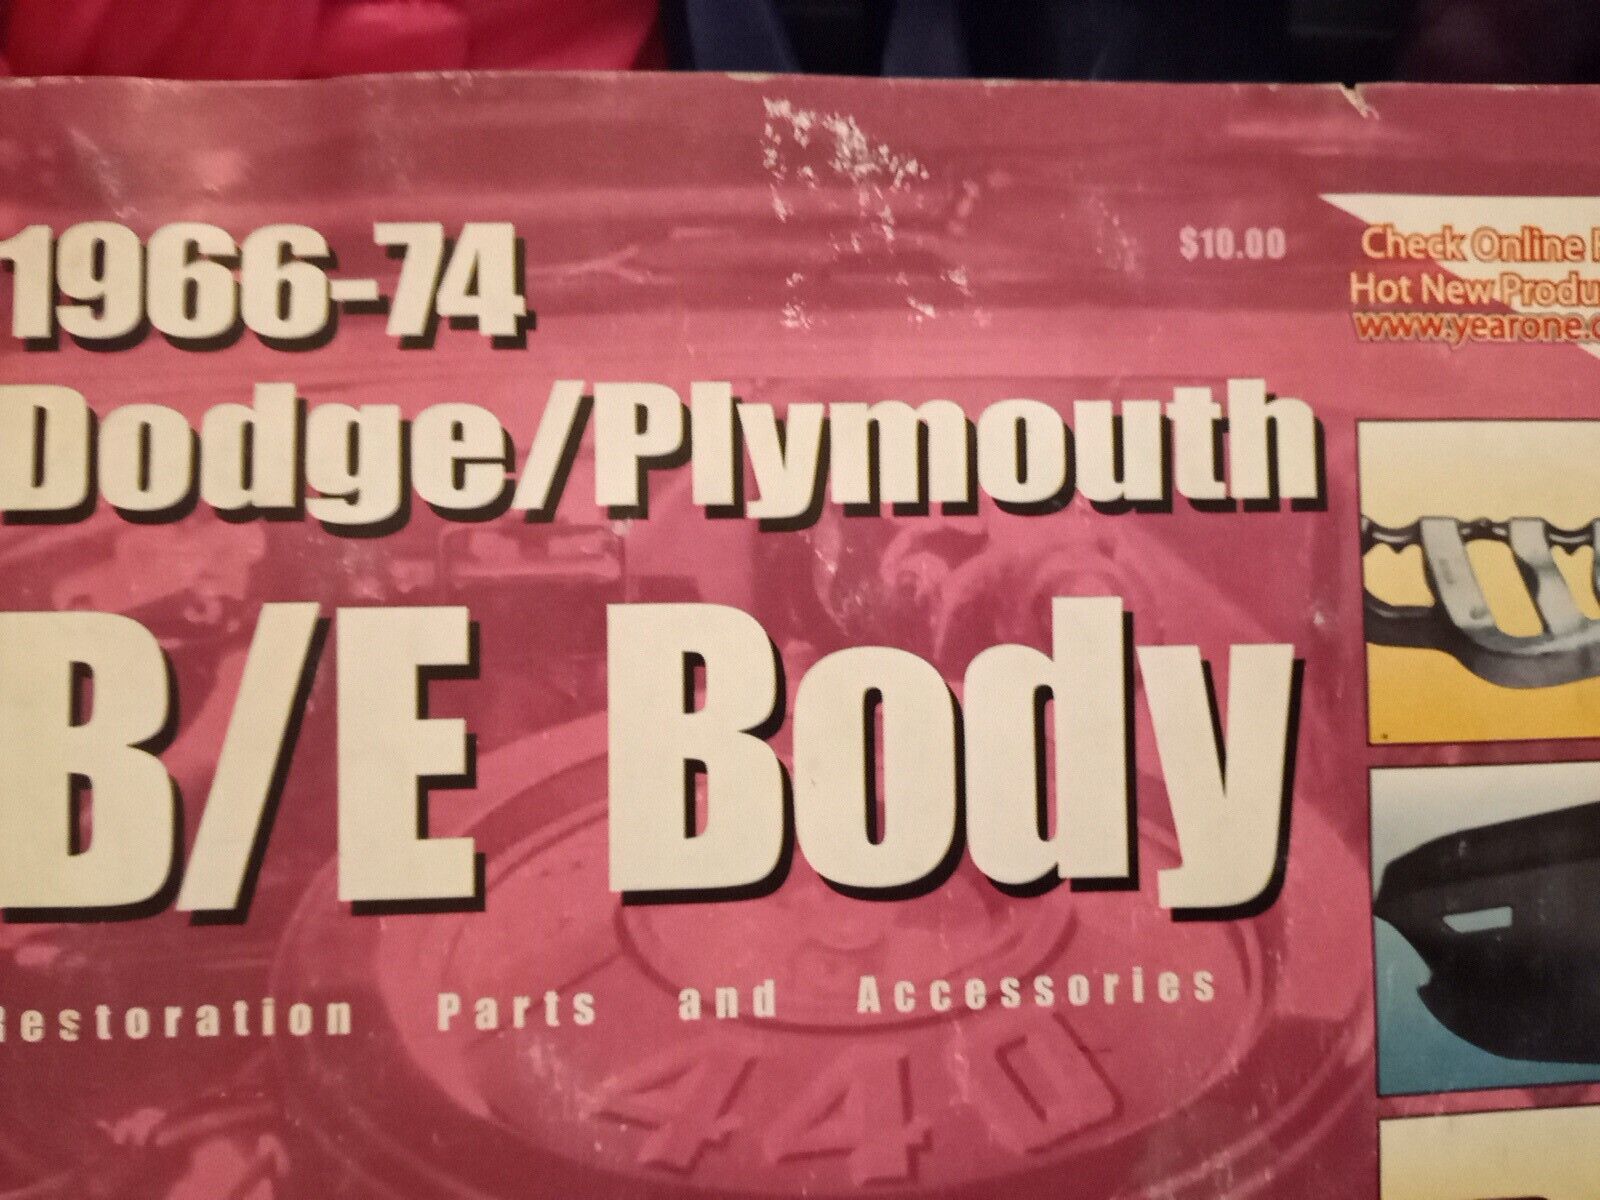 2003 YearOne Restoration Parts & Accessories for 1966-74 Dodge Plymouth B/E Body